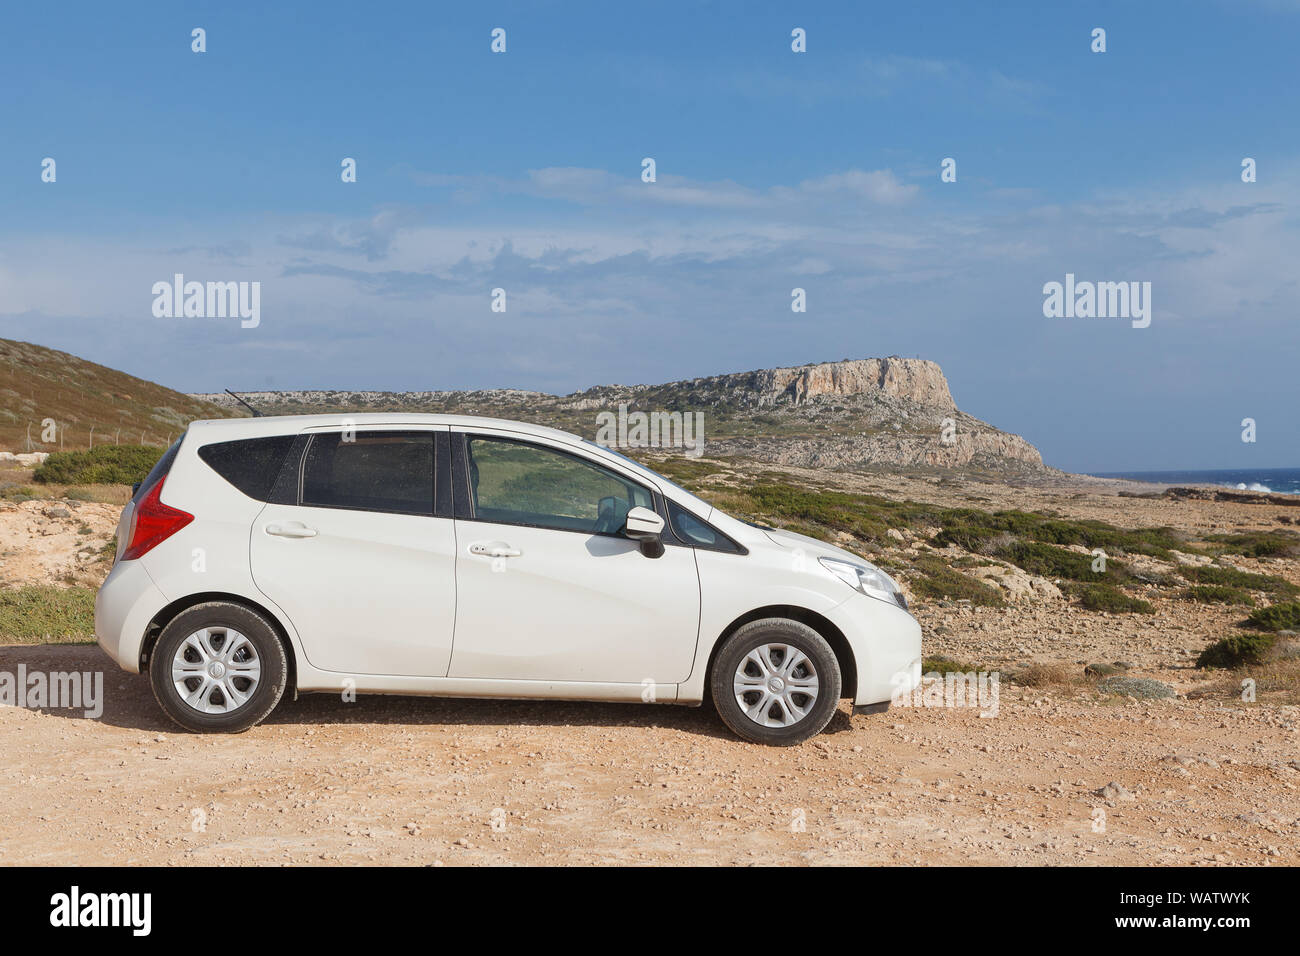 Høne Tilstedeværelse Produktivitet White economy car explores Cyprus offroad destinations Stock Photo - Alamy